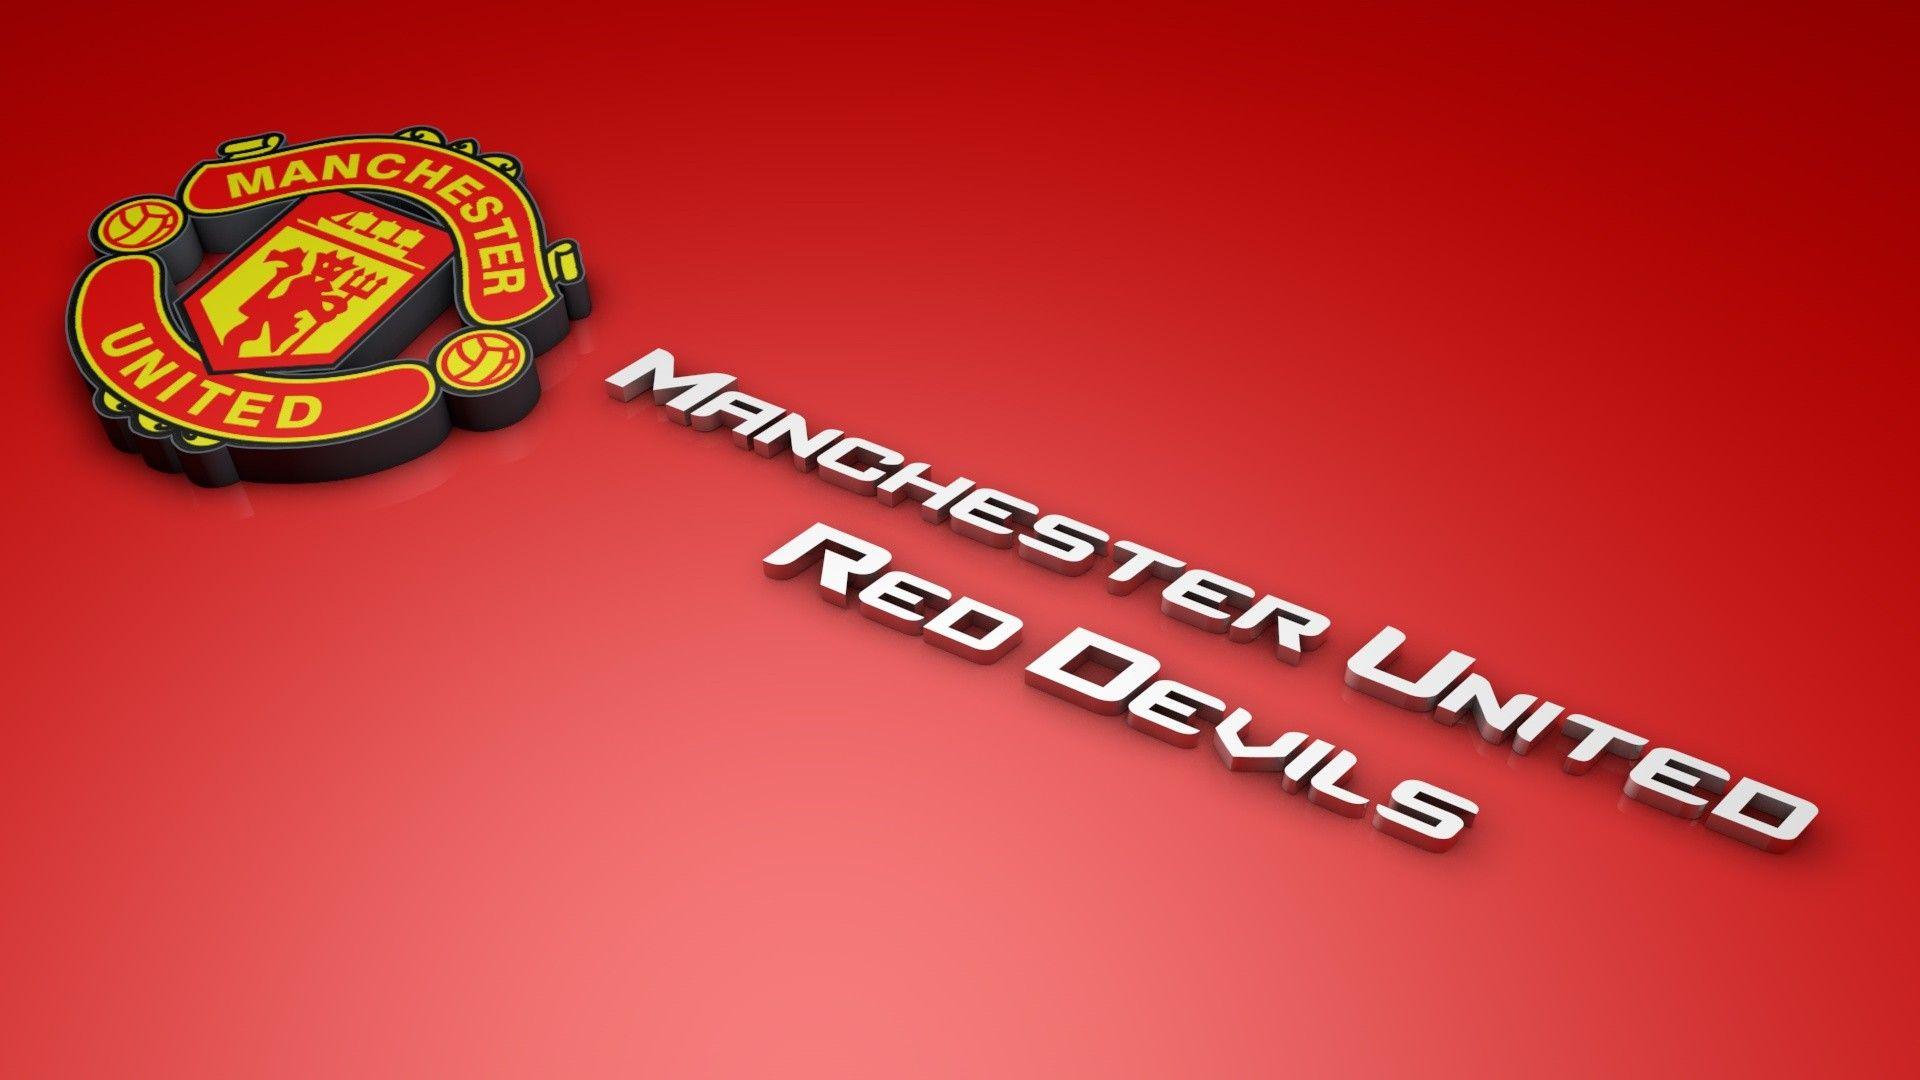 Manchester United Wallpaper, HD Manchester United Wallpaper